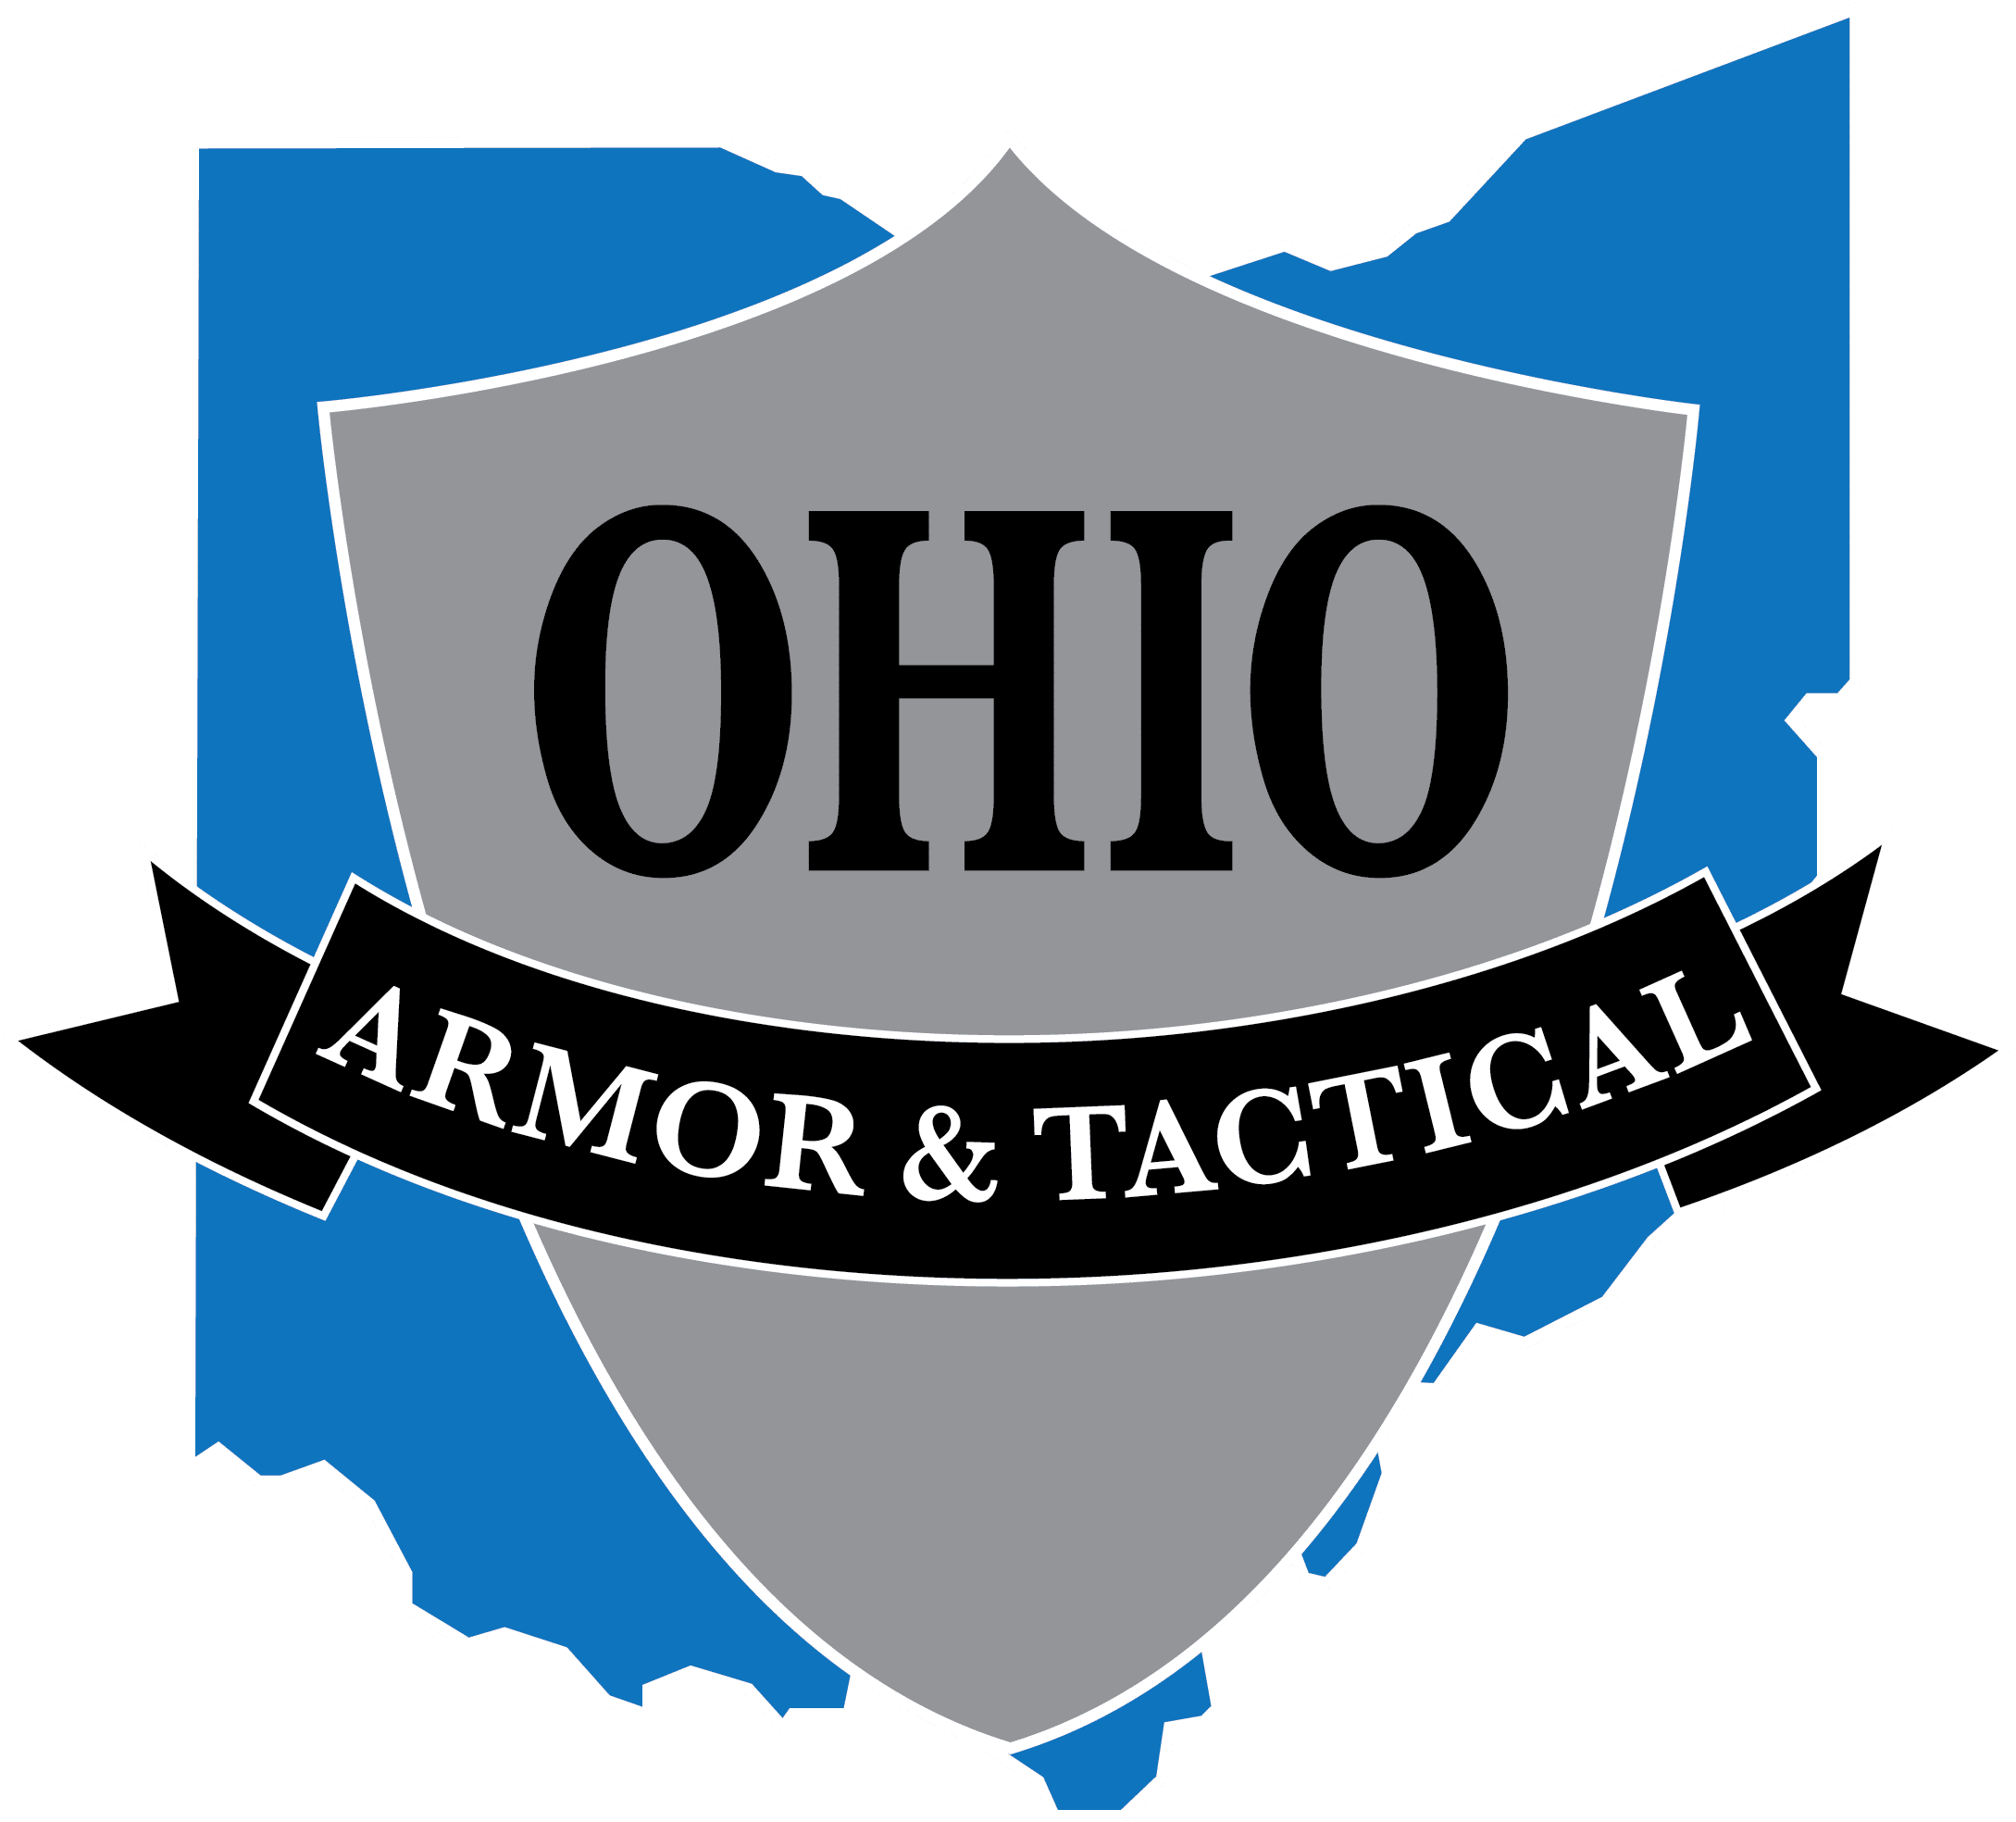 Ohio Armor & Tactical